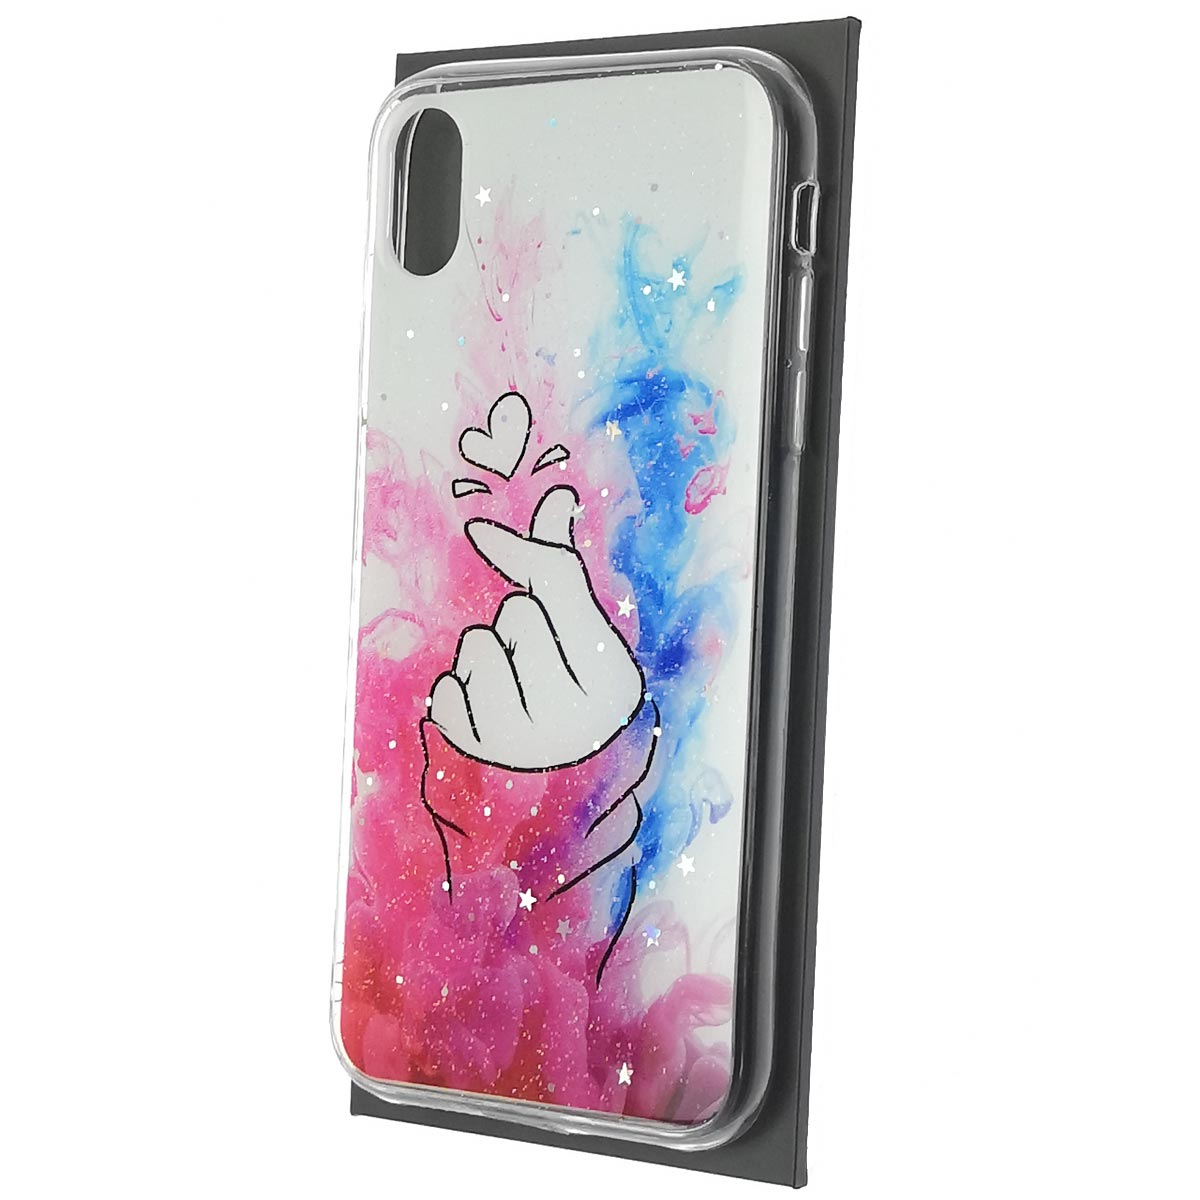 Чехол накладка Vinil для APPLE iPhone XR, силикон, блестки, глянцевый, рисунок щелчок с сердечком